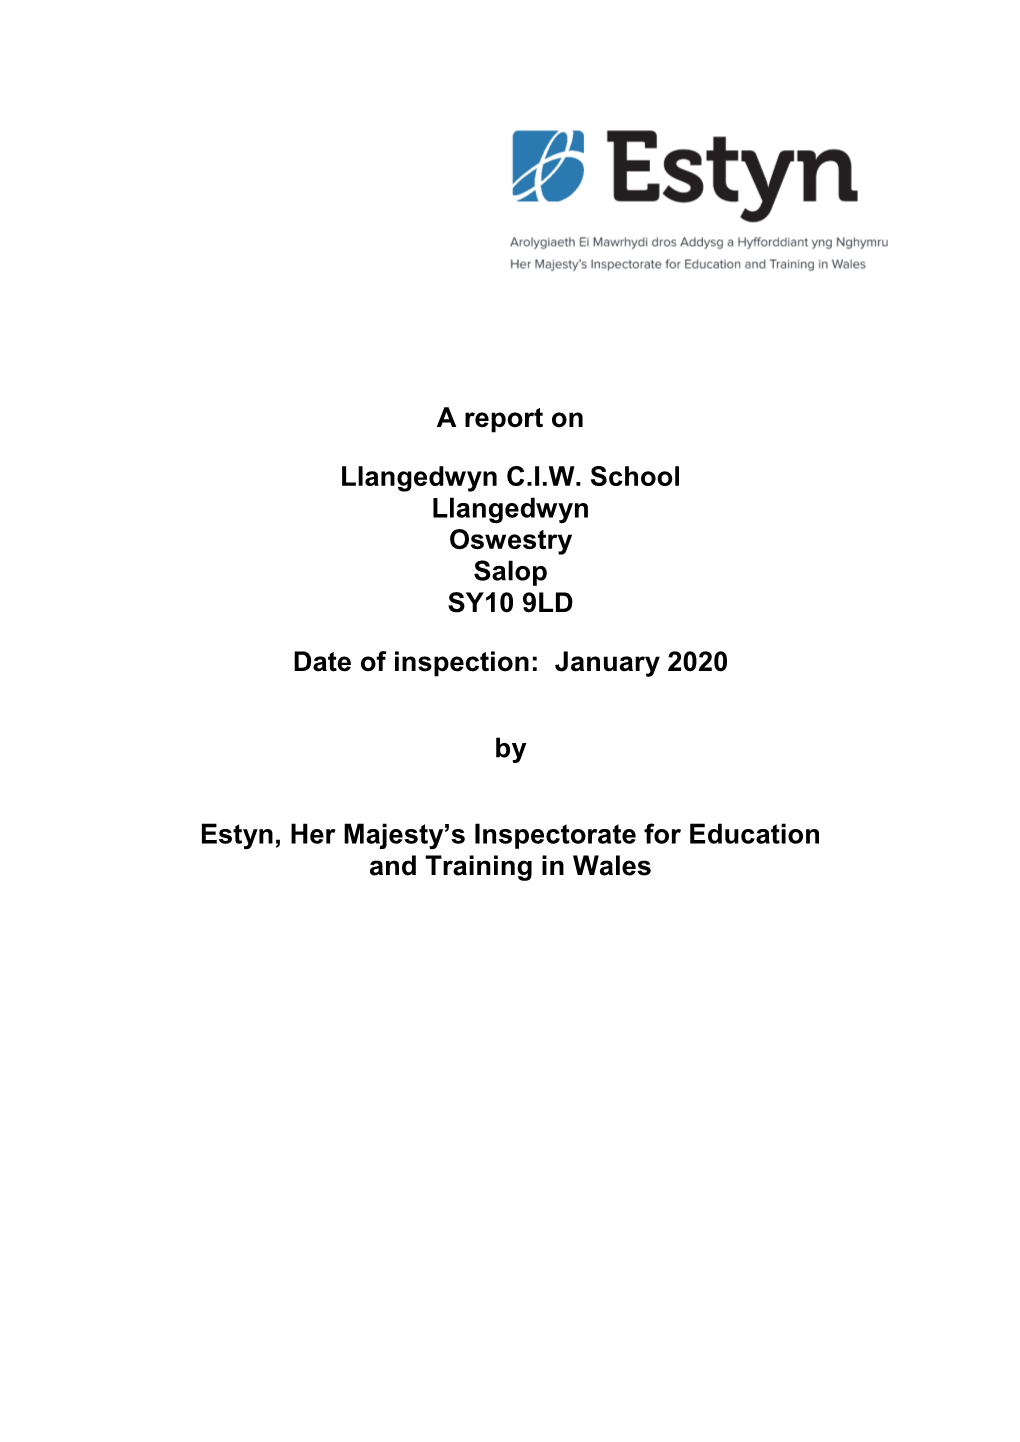 Inspection Report Llangedwyn C.I.W. School 2020